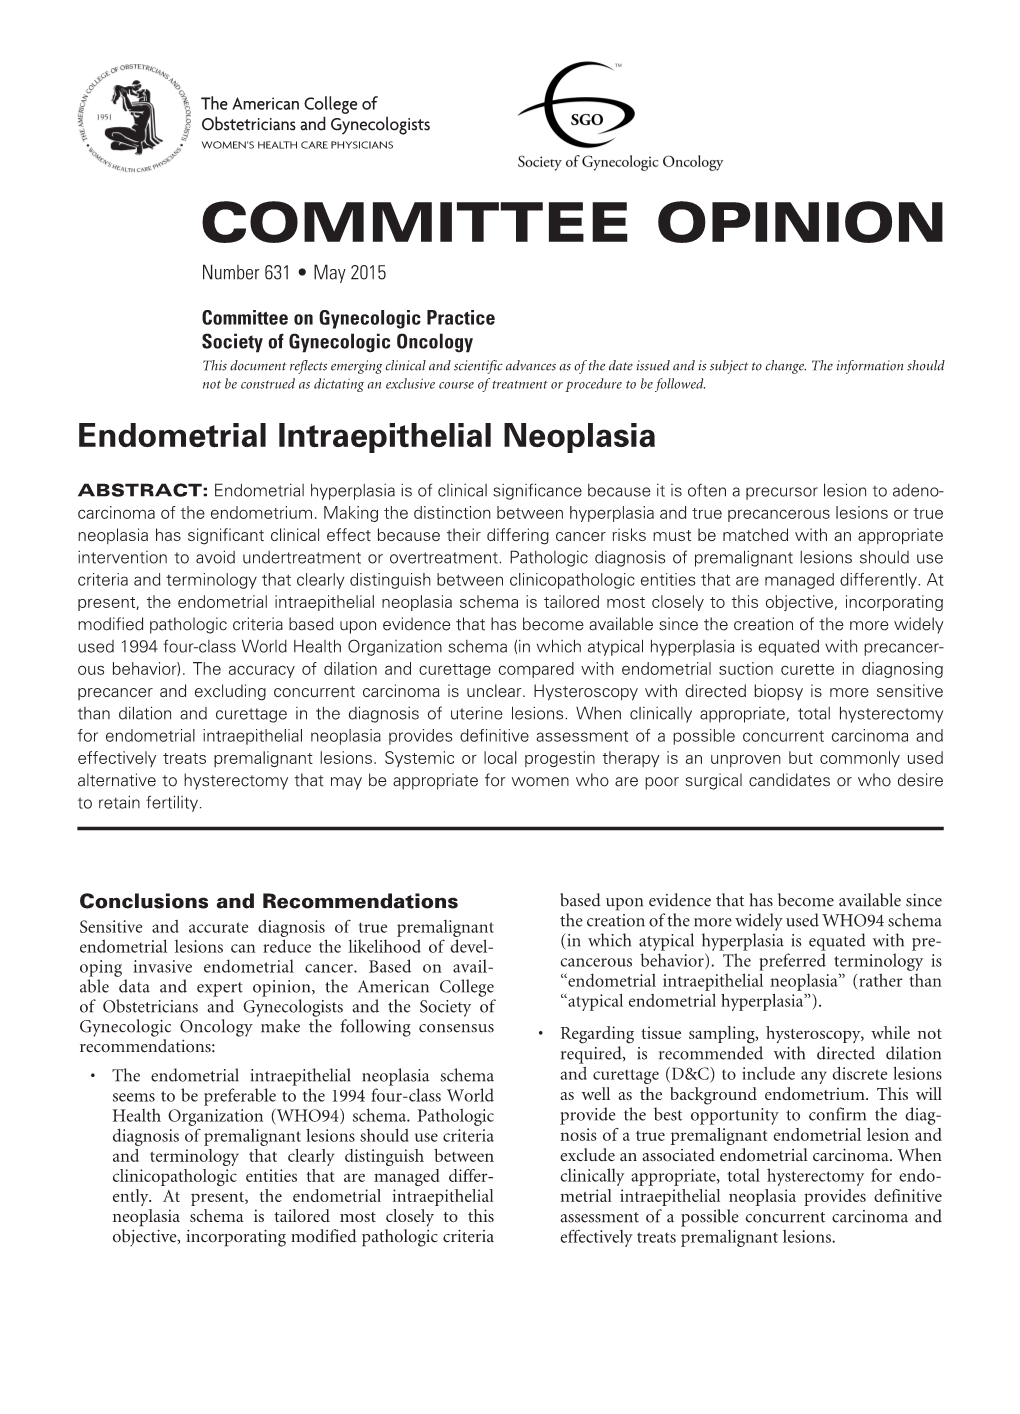 Endometrial Intraepithelial Neoplasia